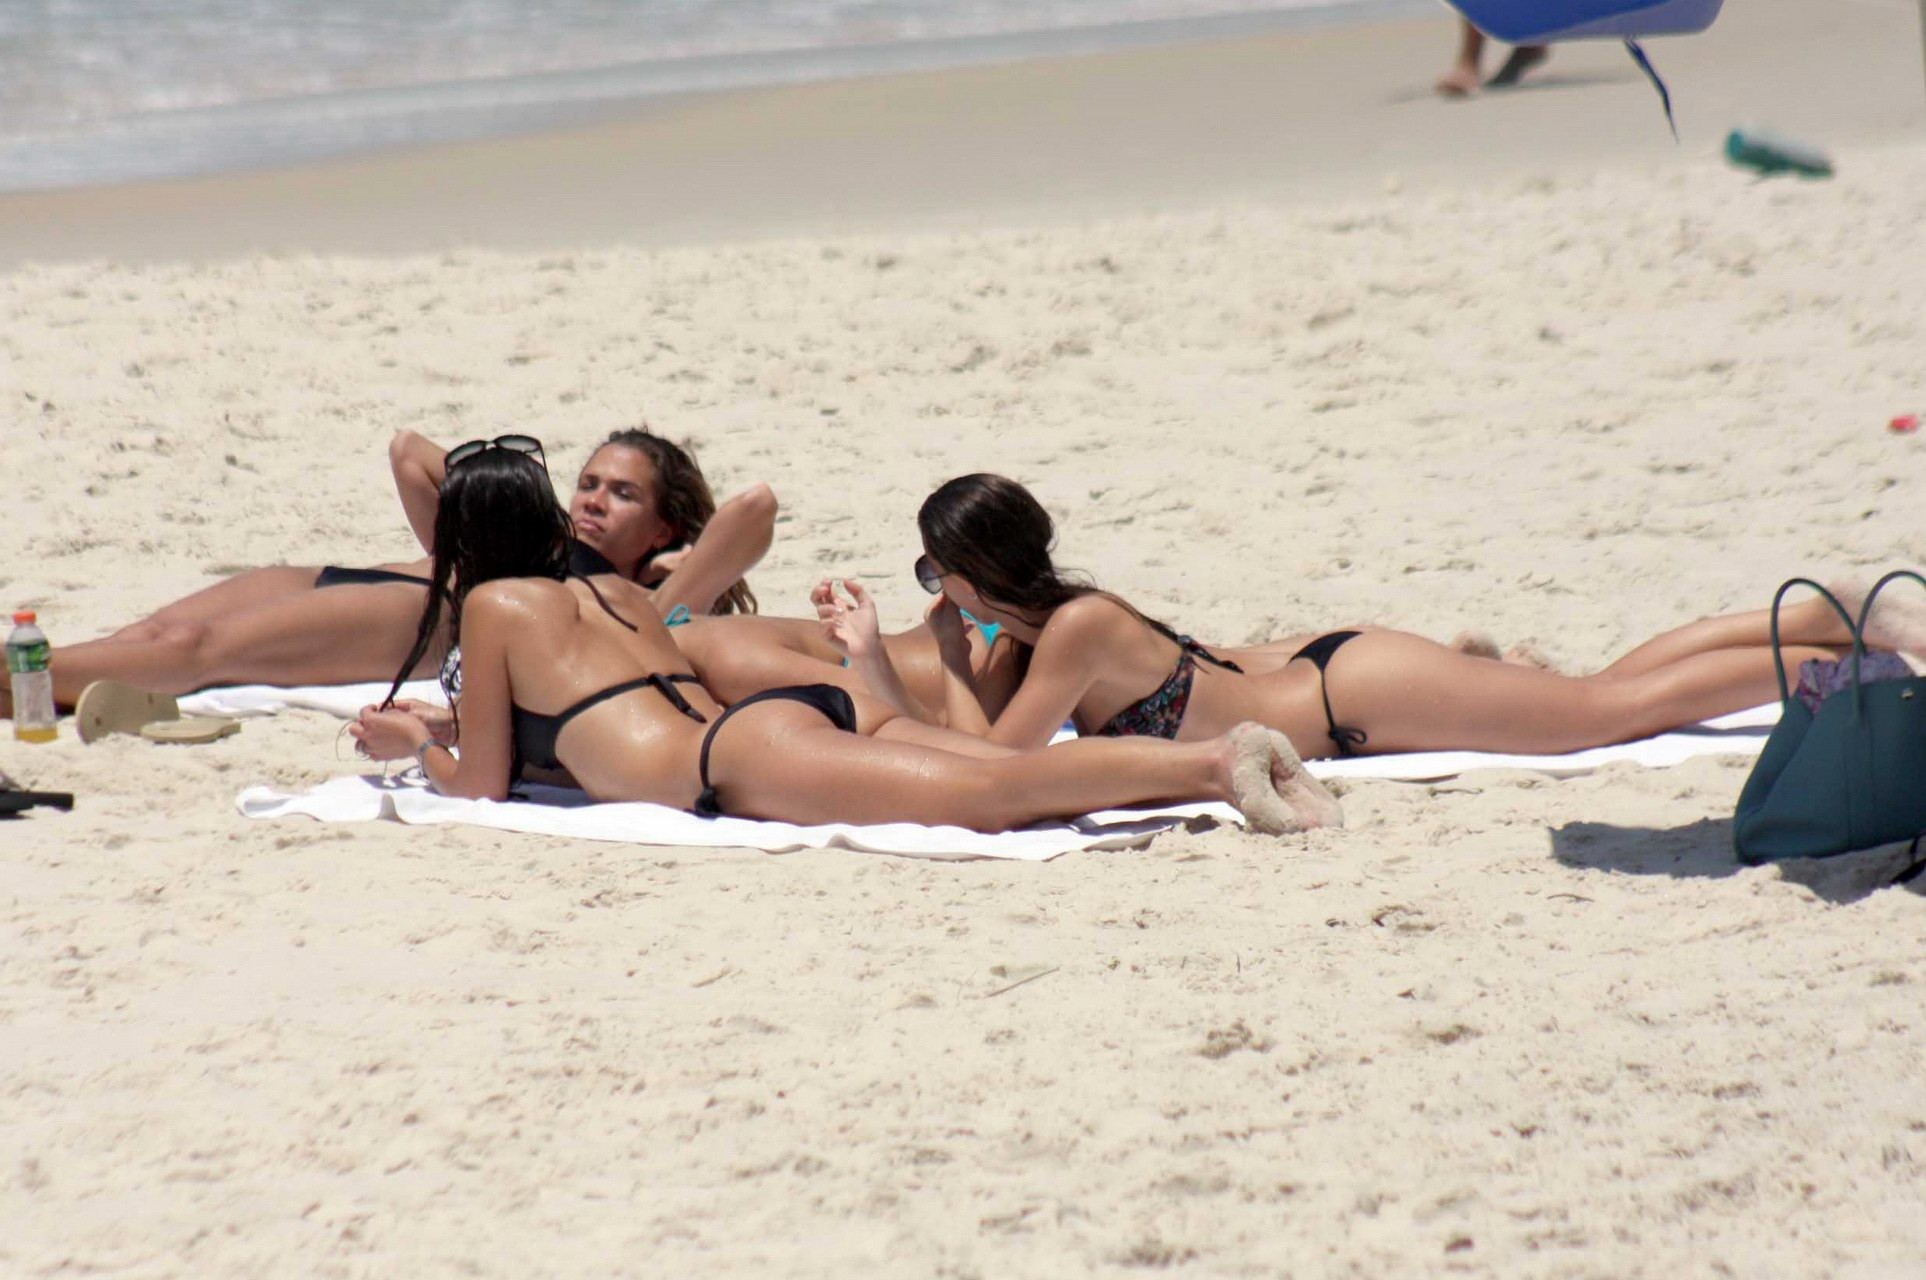 Jordana brewster trägt sexy schwarzen bikini am strand in rio de janeiro
 #75327349